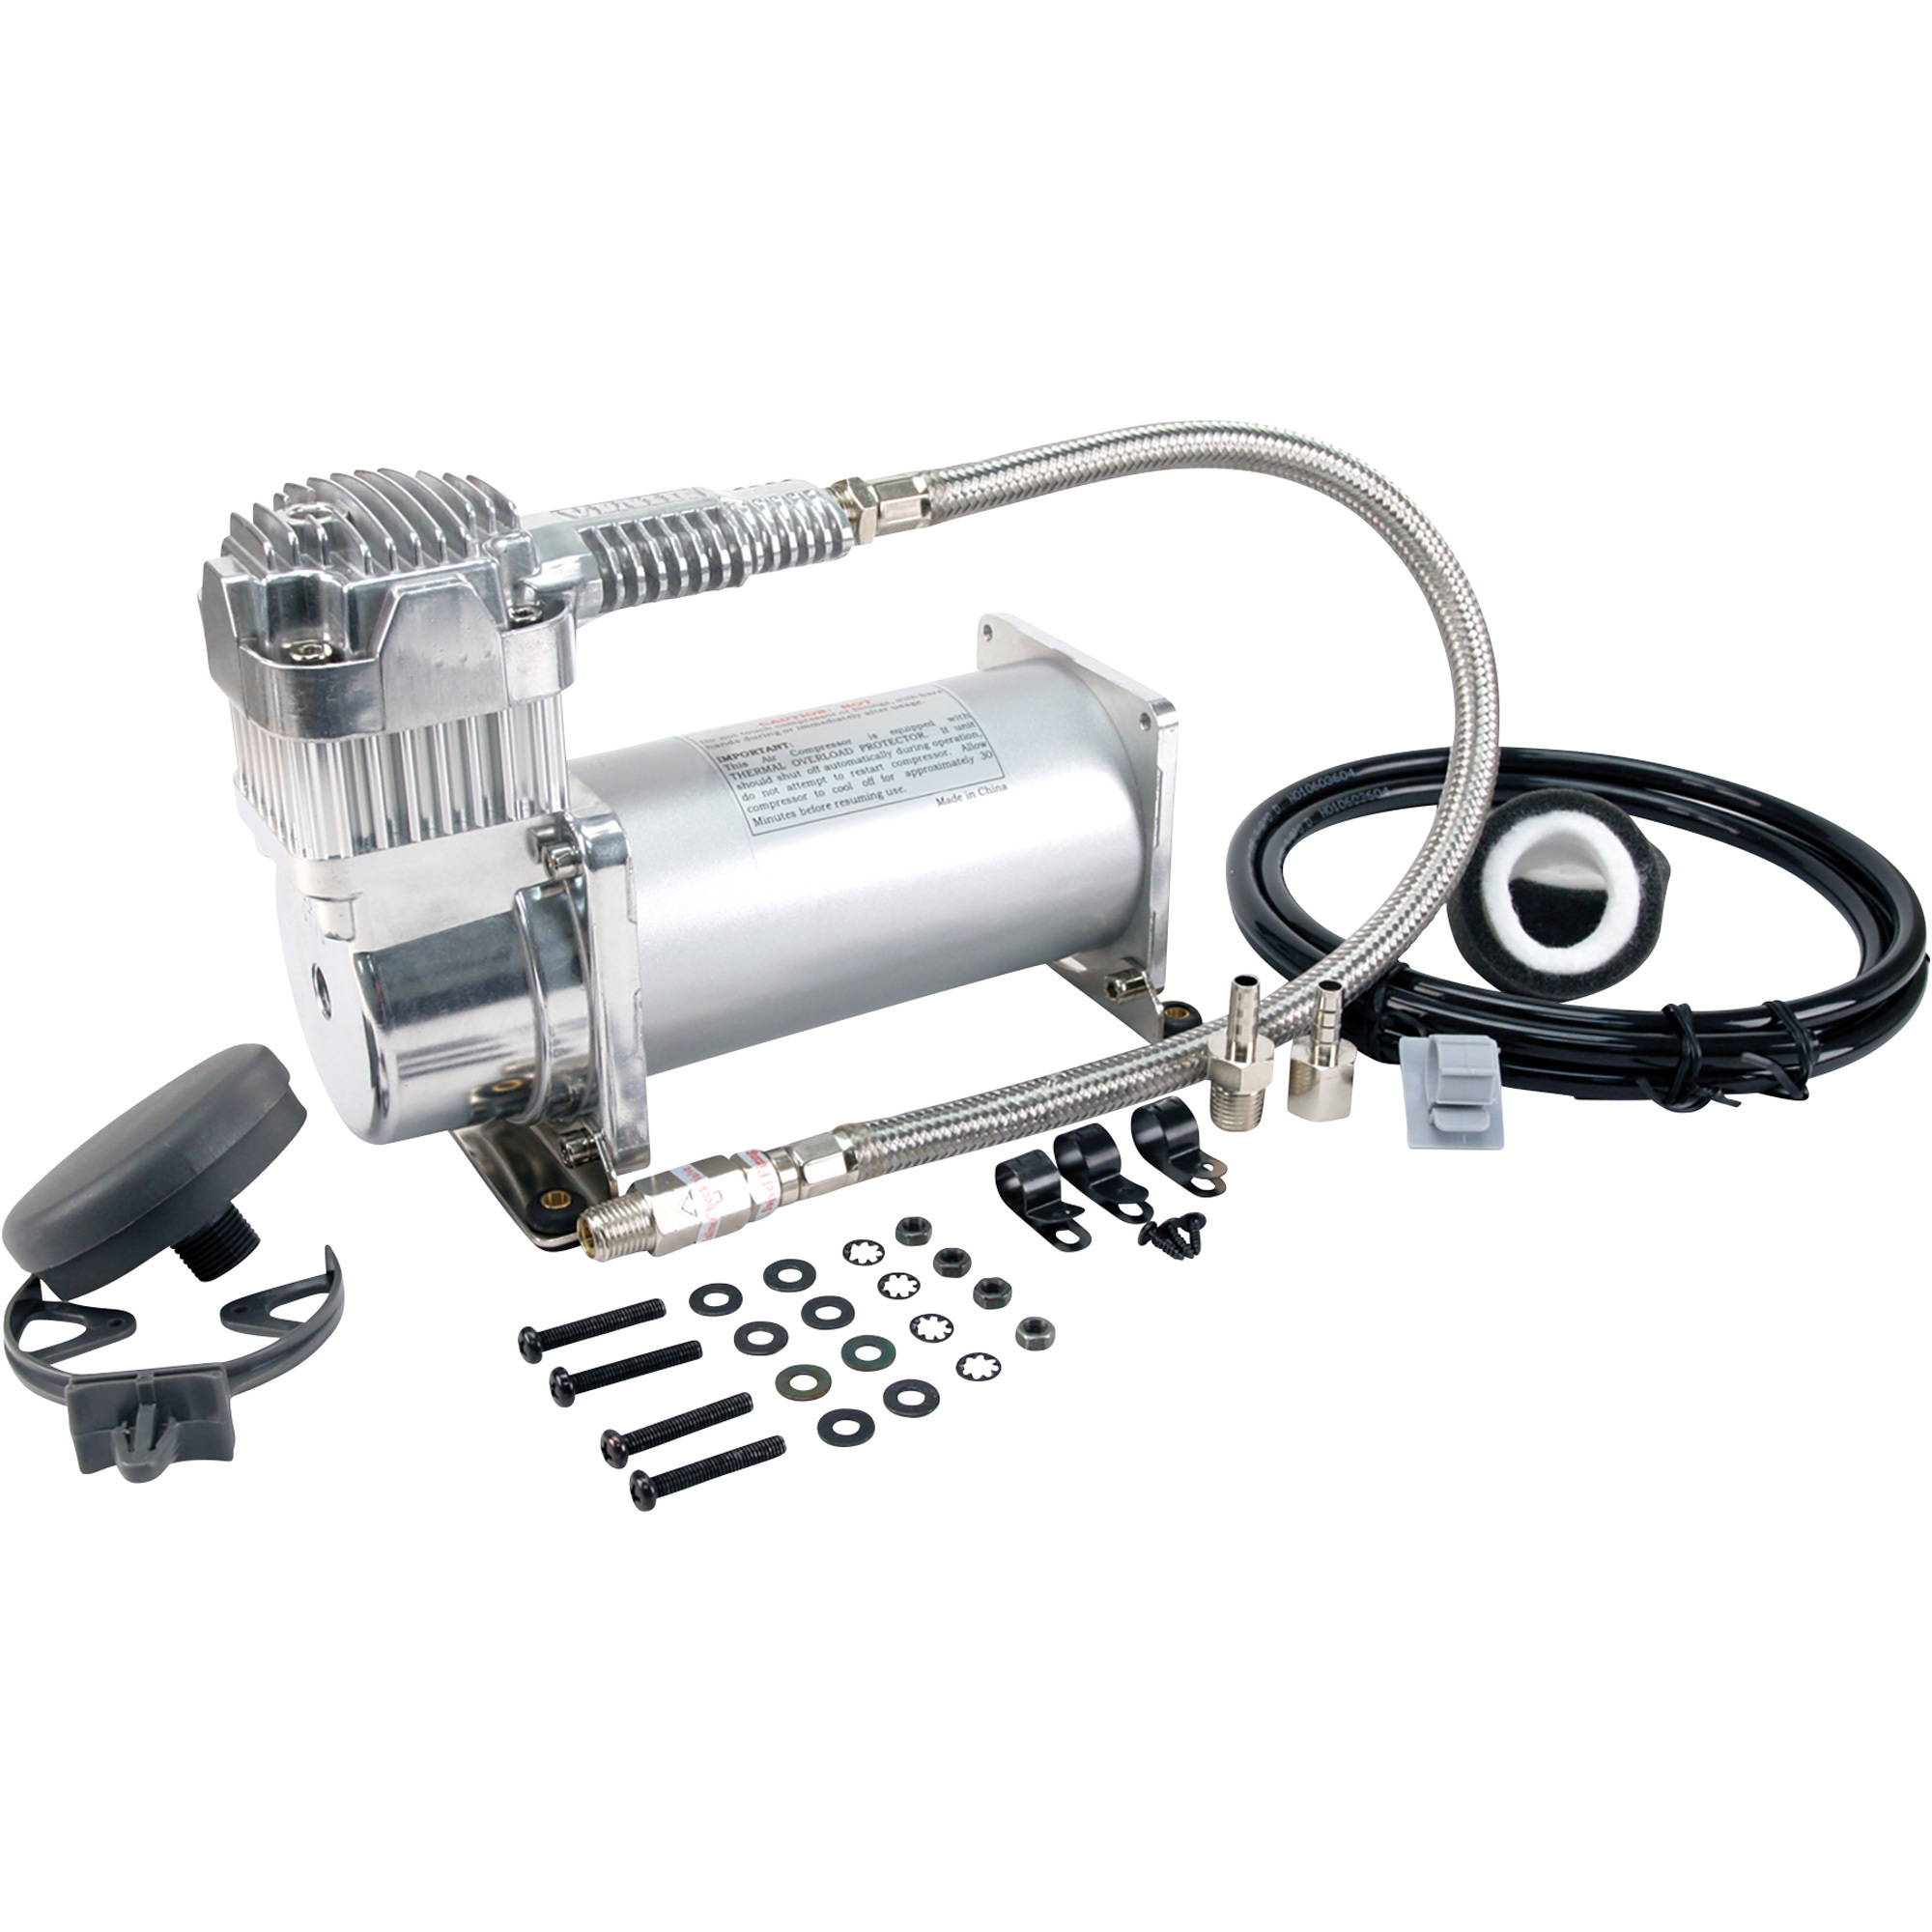 VIAIR 400C Electric Air Compressor Kit, 150 PSI, Silver, Model 400c